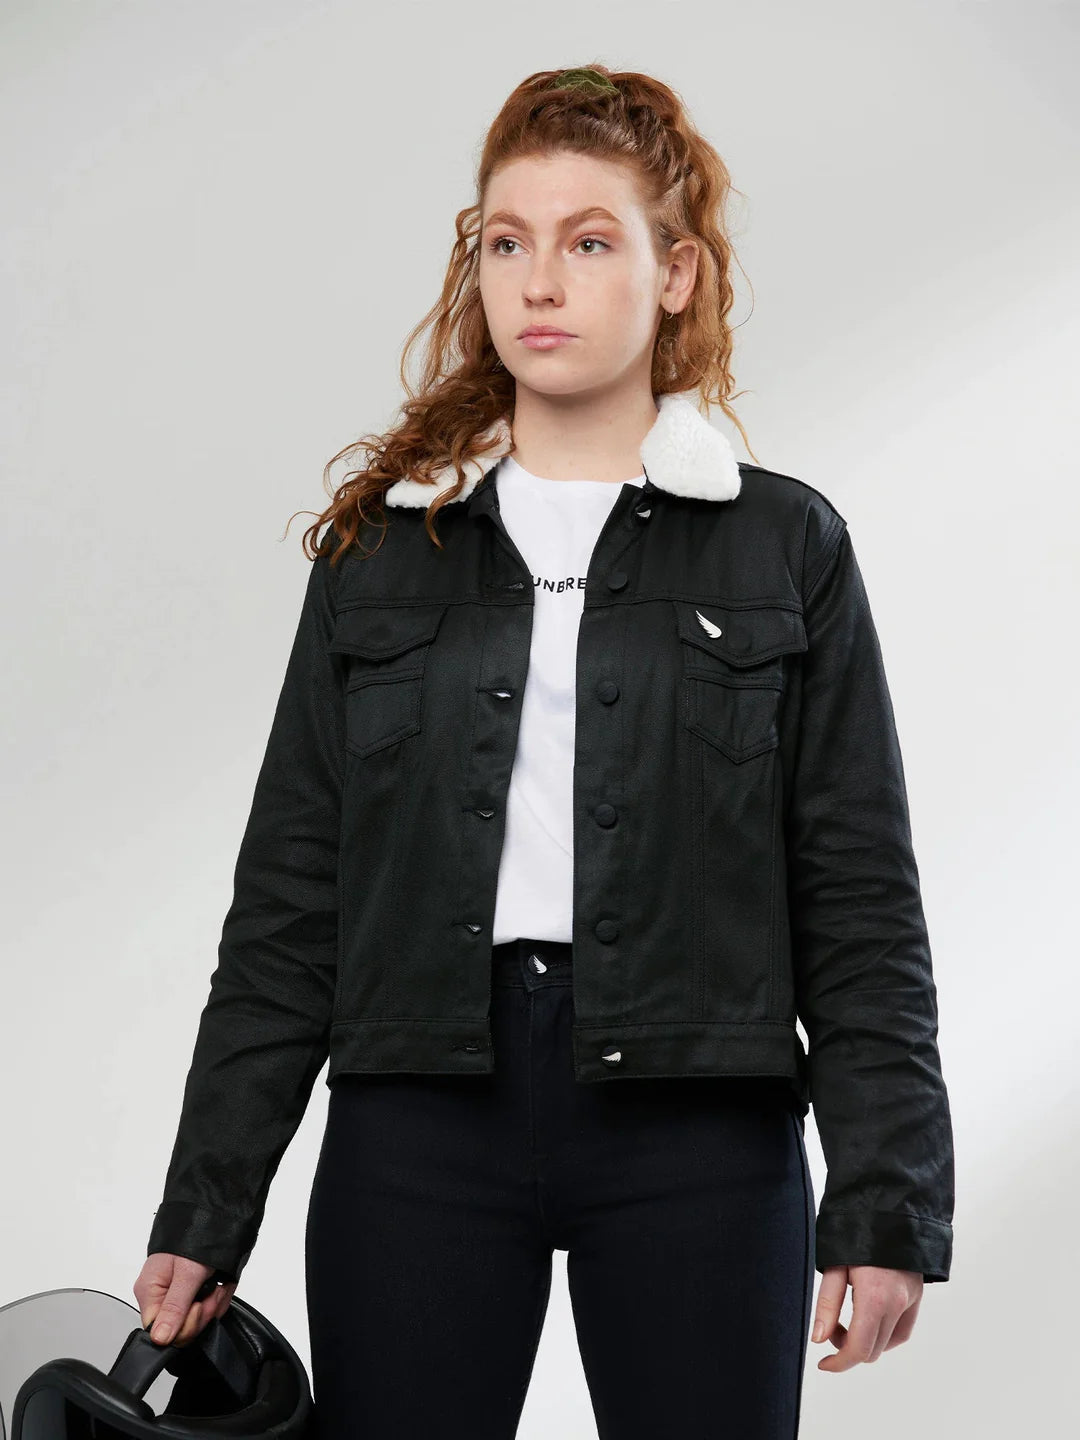 Women's Unbreakable Jacket (armor pockets) - Saint USA